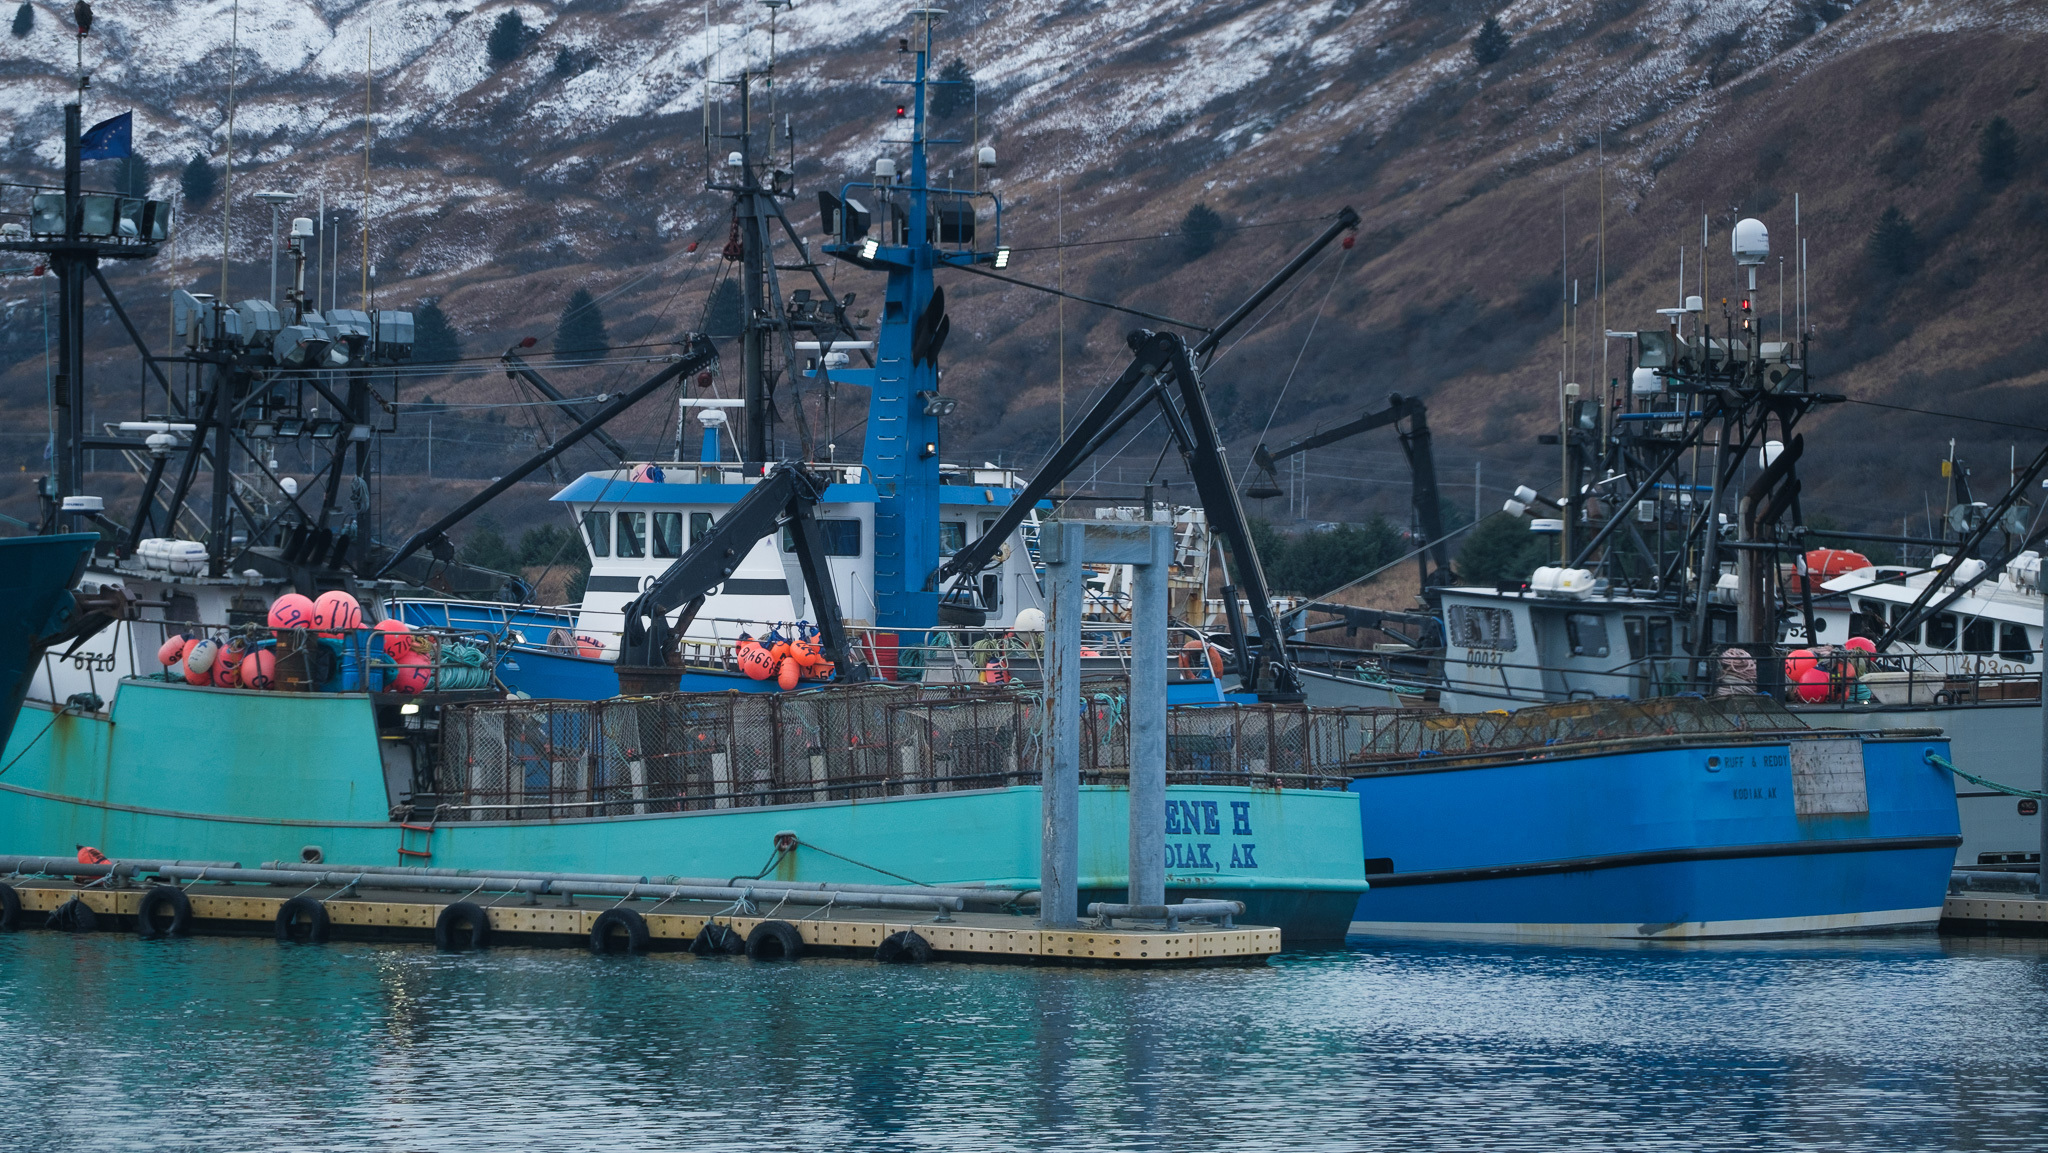 Kodiak fishing vessels